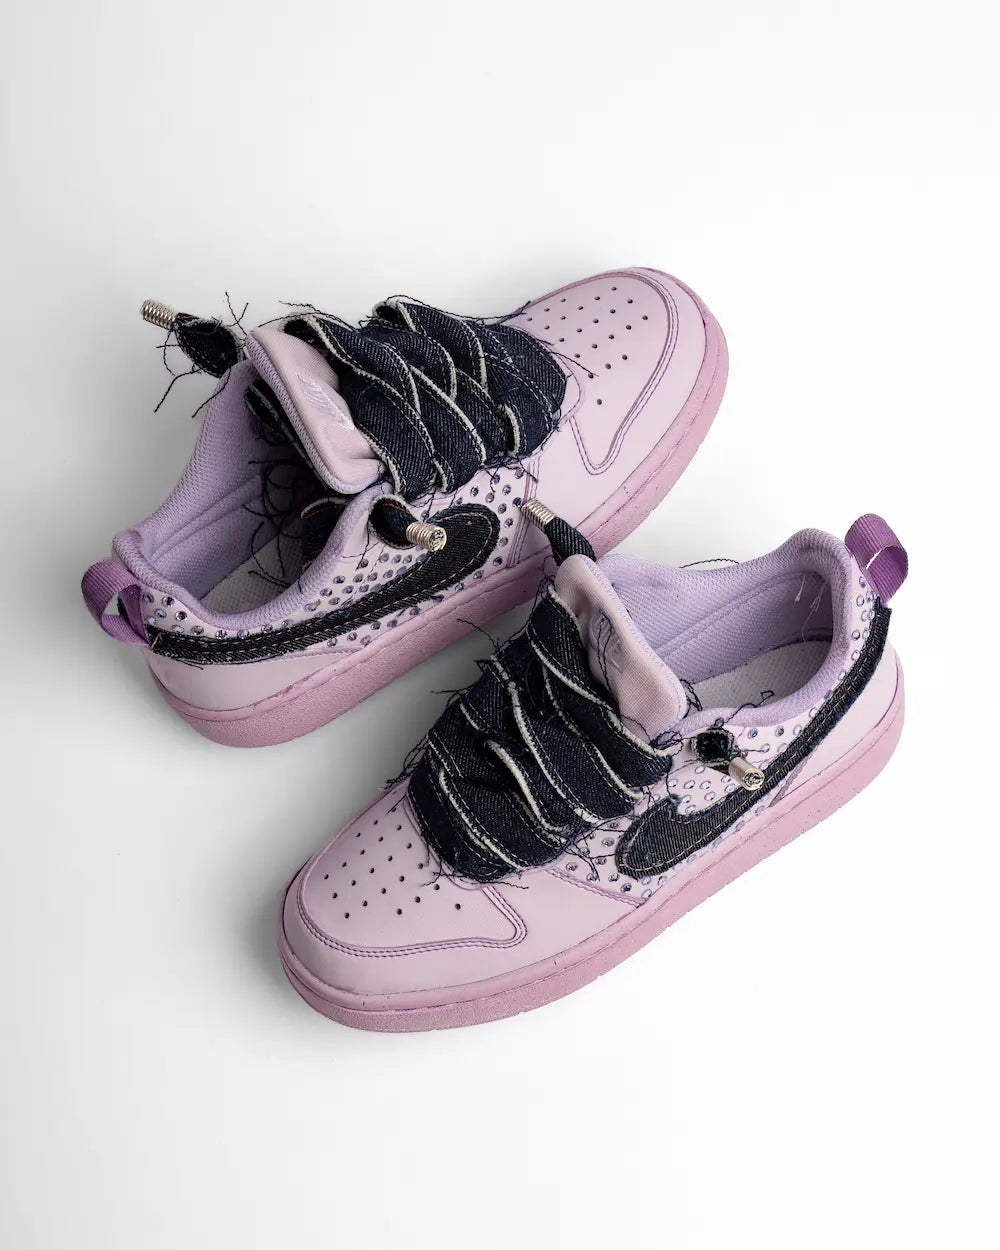 Nike Court Borough - Sparkly Lilac